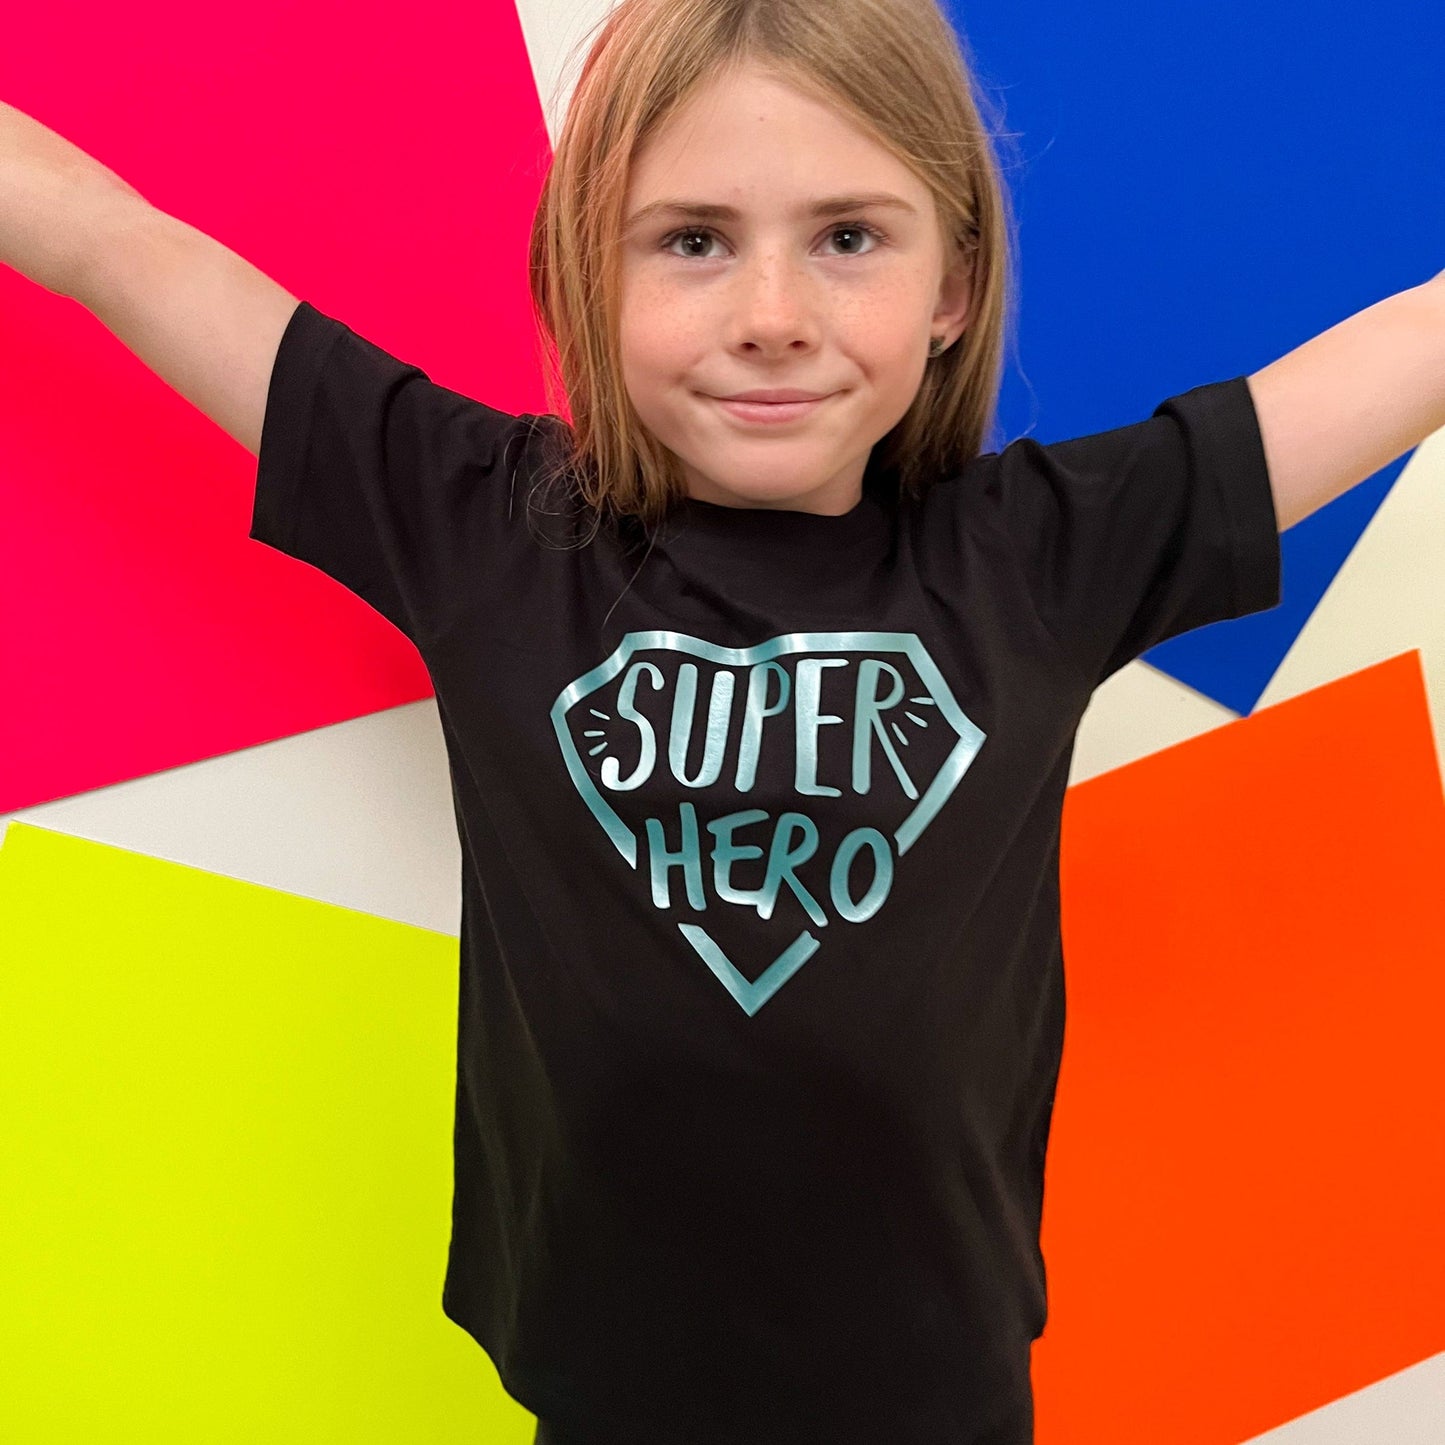 Metallic Superhero T Shirts, super hero shirts for boys, girls or teens